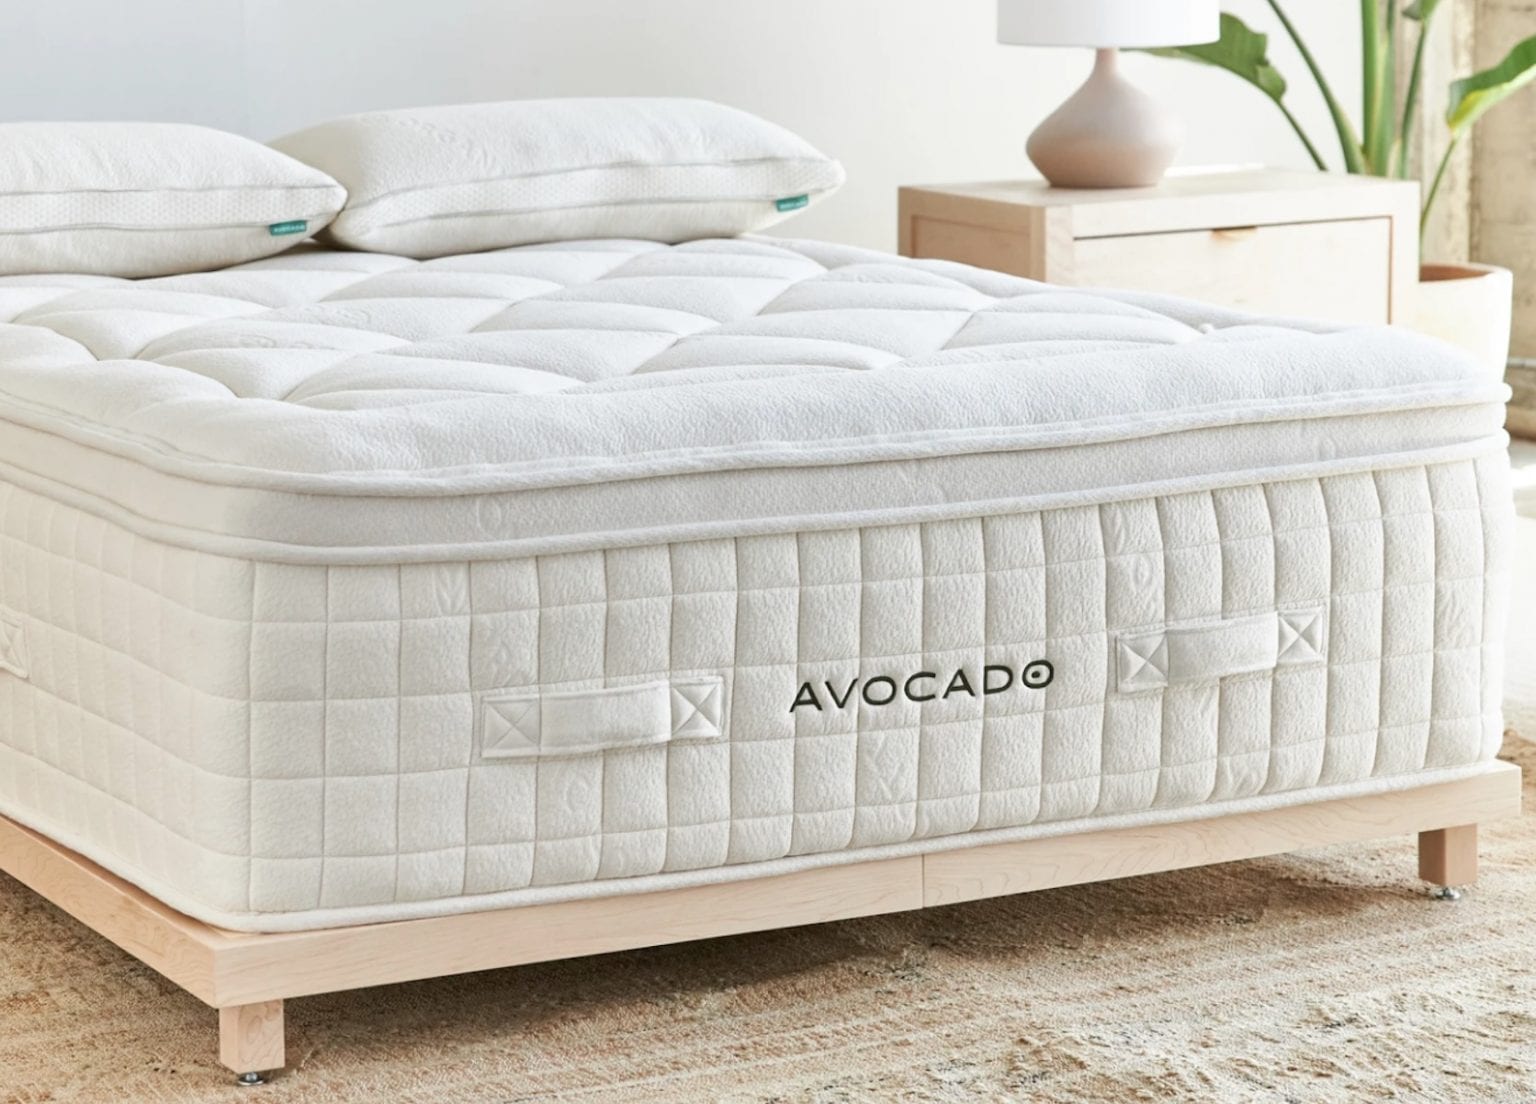 avacado mattresses on sale